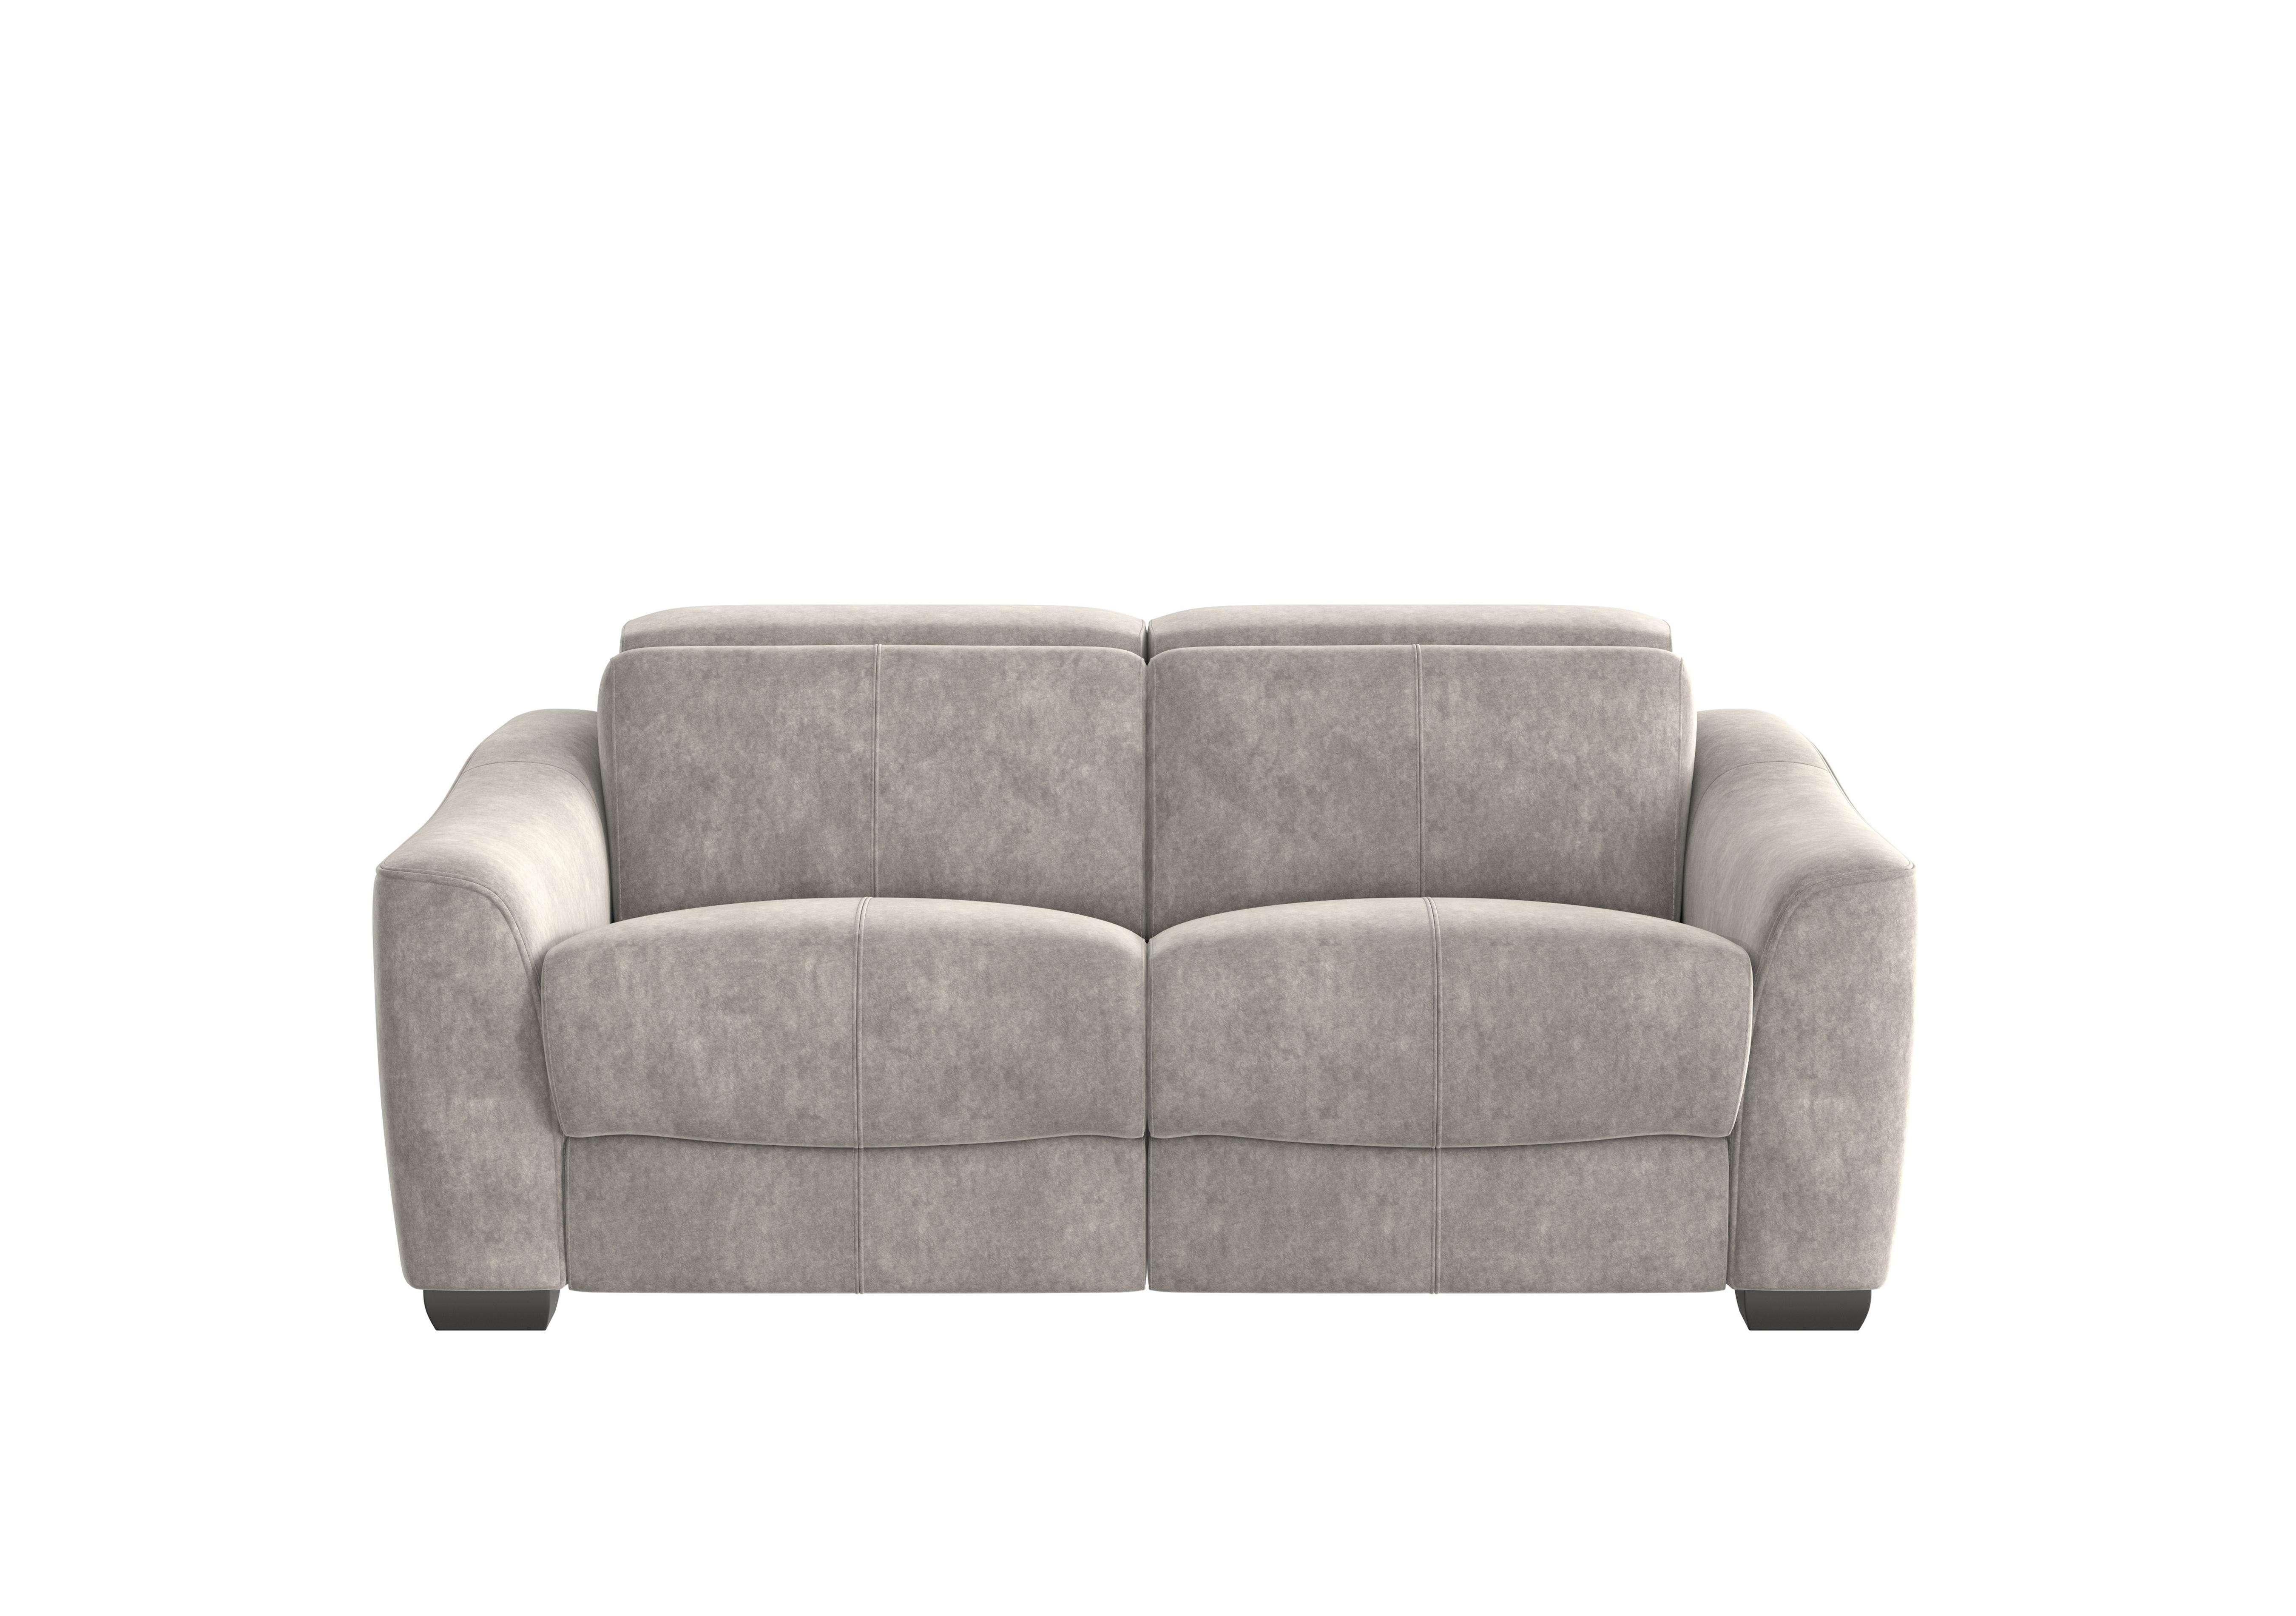 Xavier 2 Seater Fabric Sofa in Bfa-Bnn-R28 Grey on Furniture Village